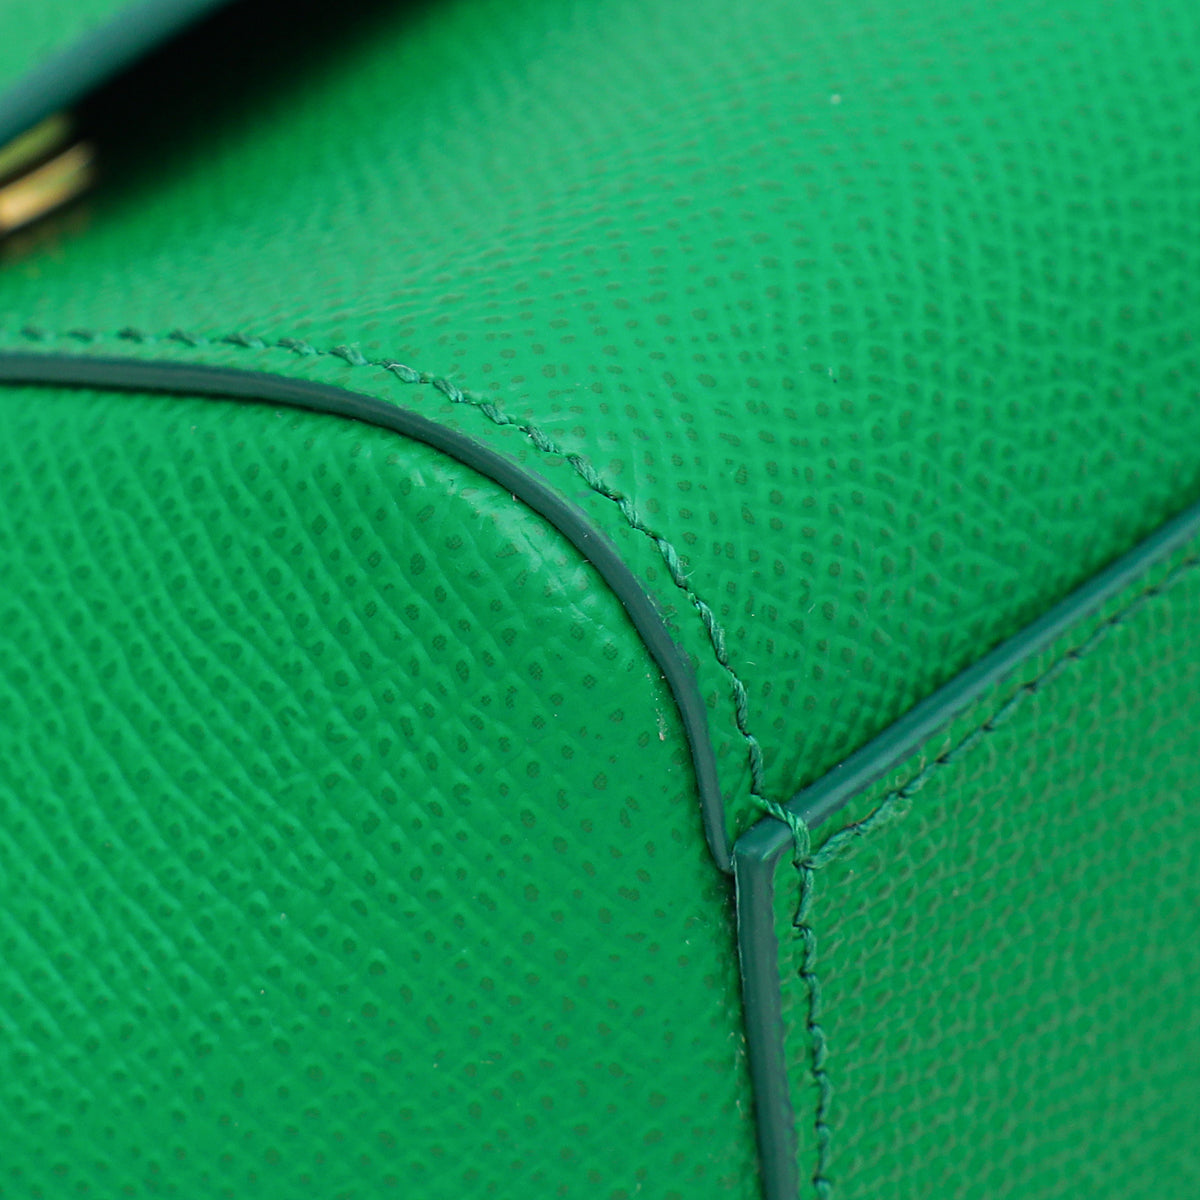 Dolce & Gabbana Green Dauphine Sicily Small Bag